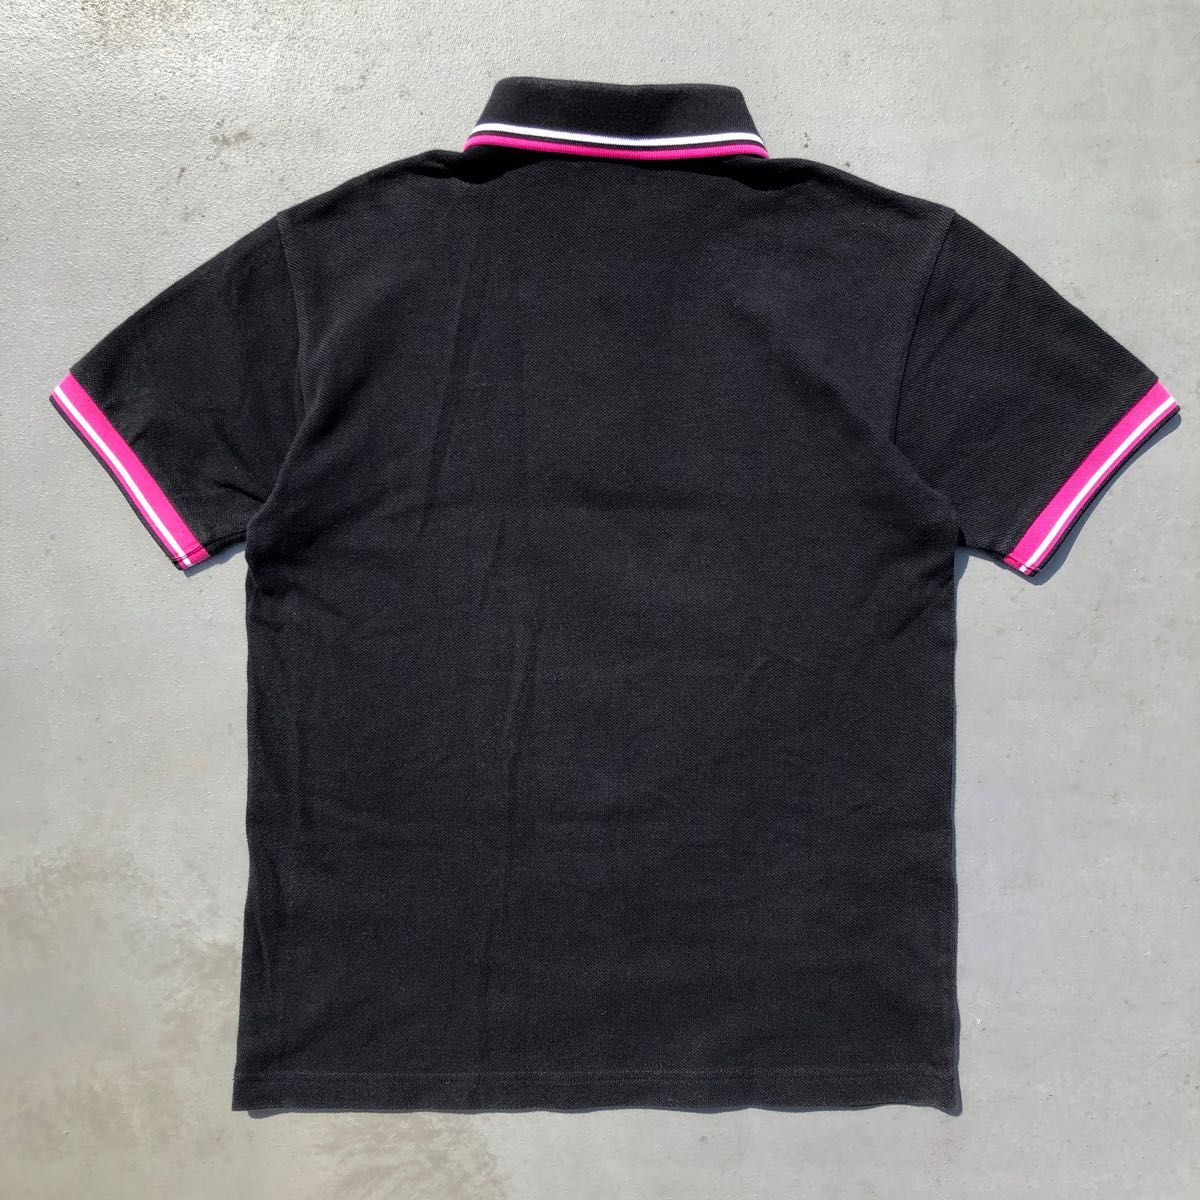 FRED PERRY フレッドペリー 袖ボーダー 刺繍ロゴ 半袖 Mサイズ ブラック 黒色 ピンク 水色 日本製 ヒットユニオン